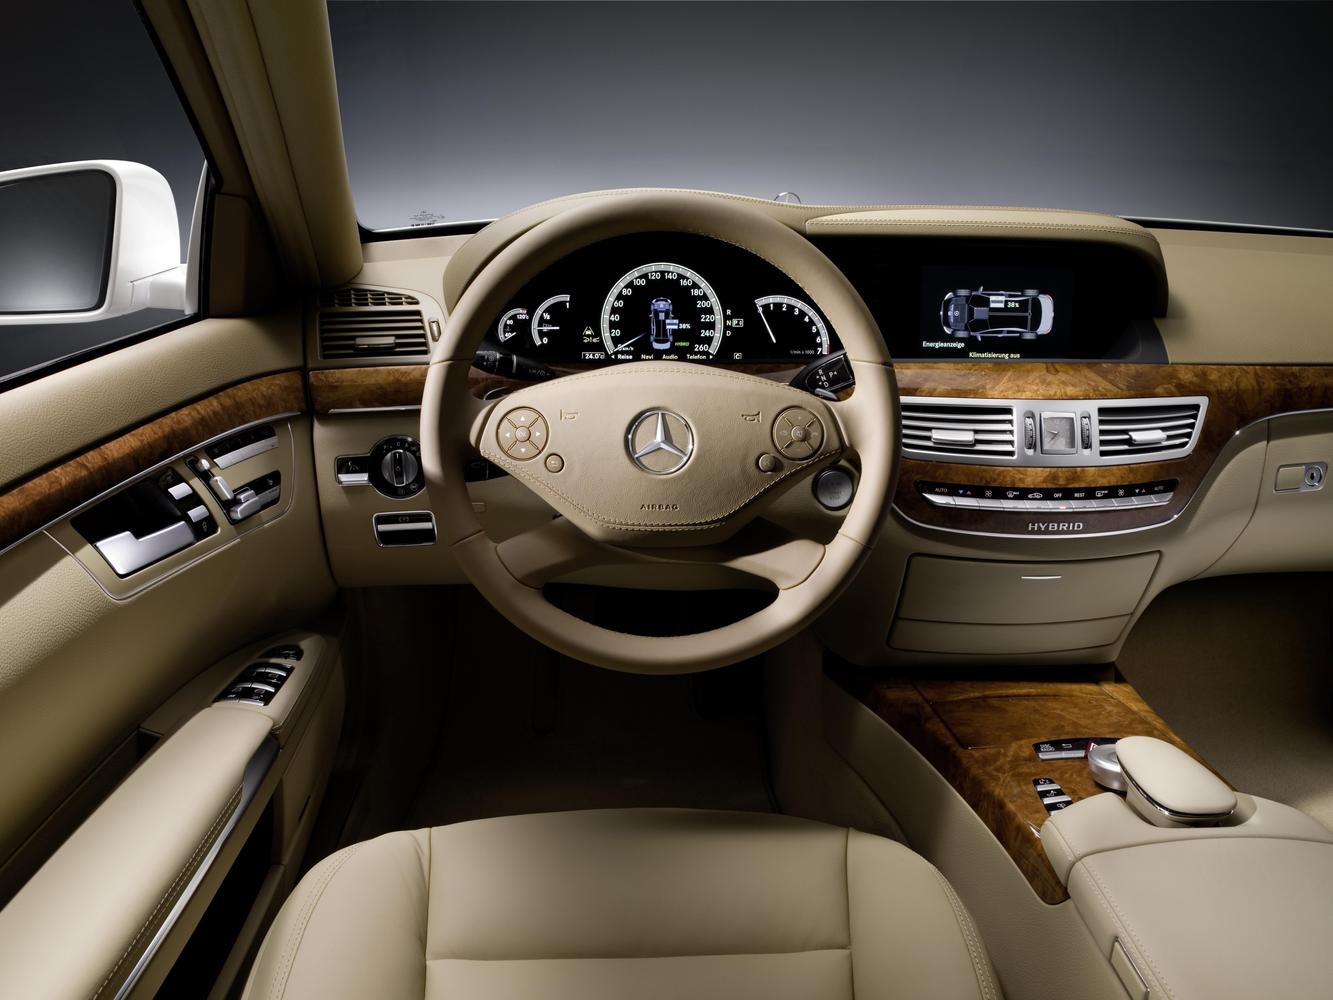 седан Long Mercedes-Benz S-klasse 2009 - 2013г выпуска модификация 2.1 AT (204 л.с.)